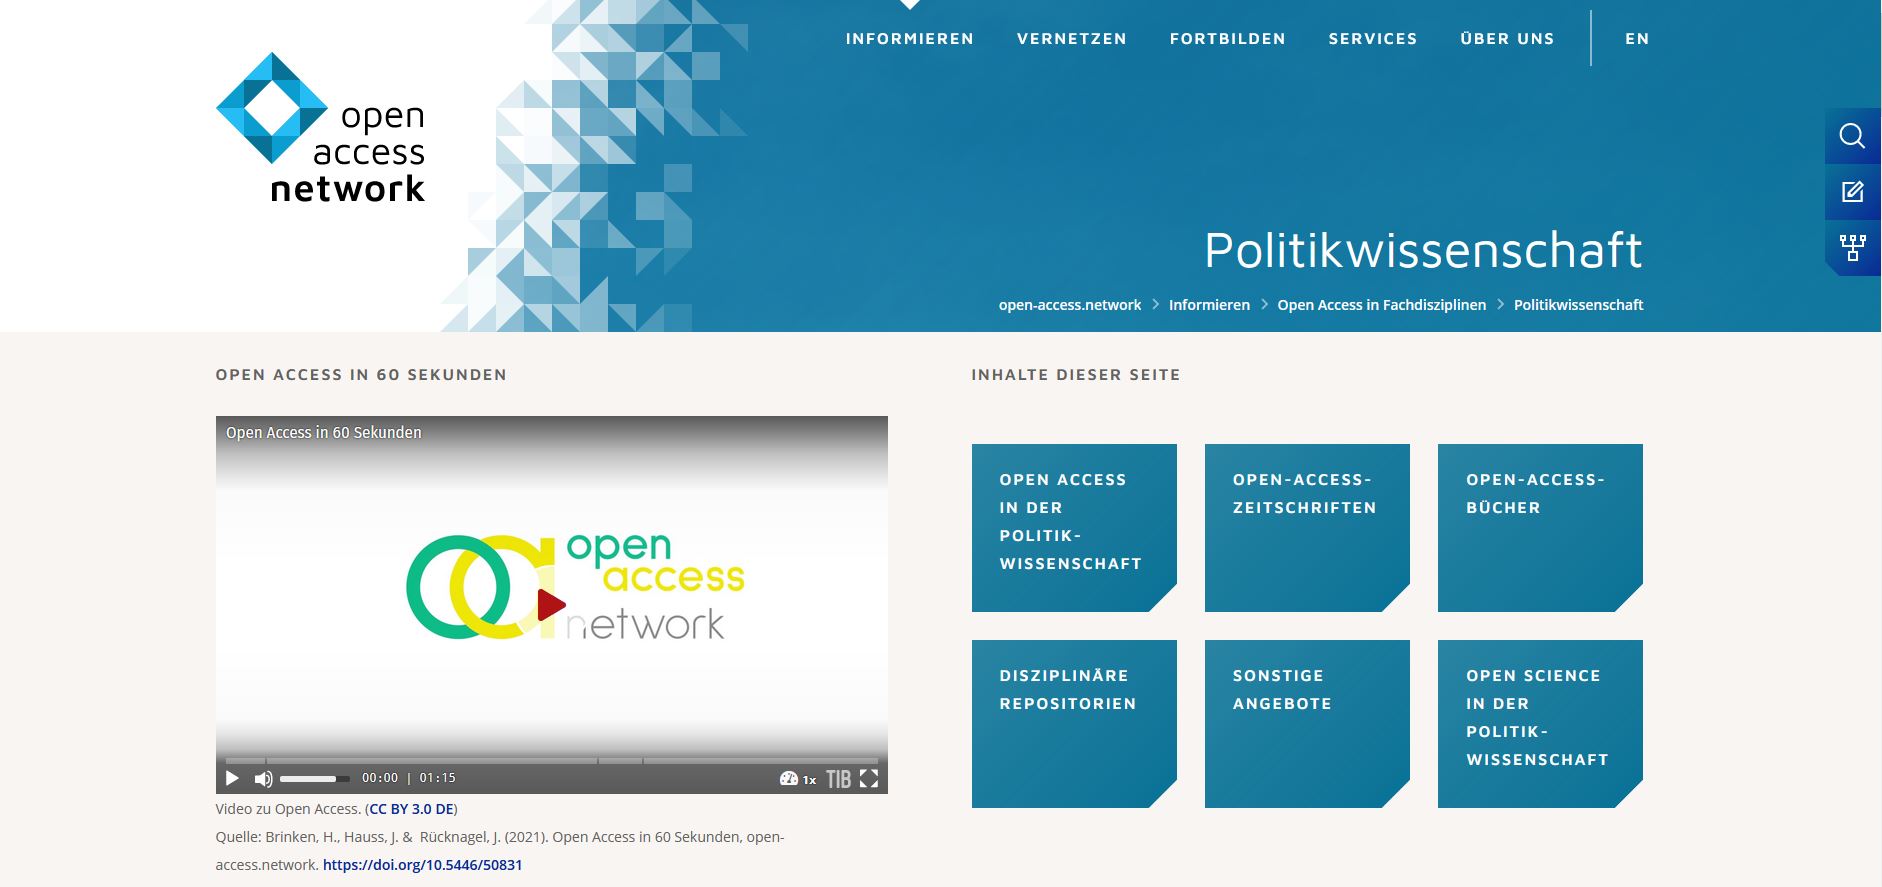 Open Access in der Politikwissenschaft